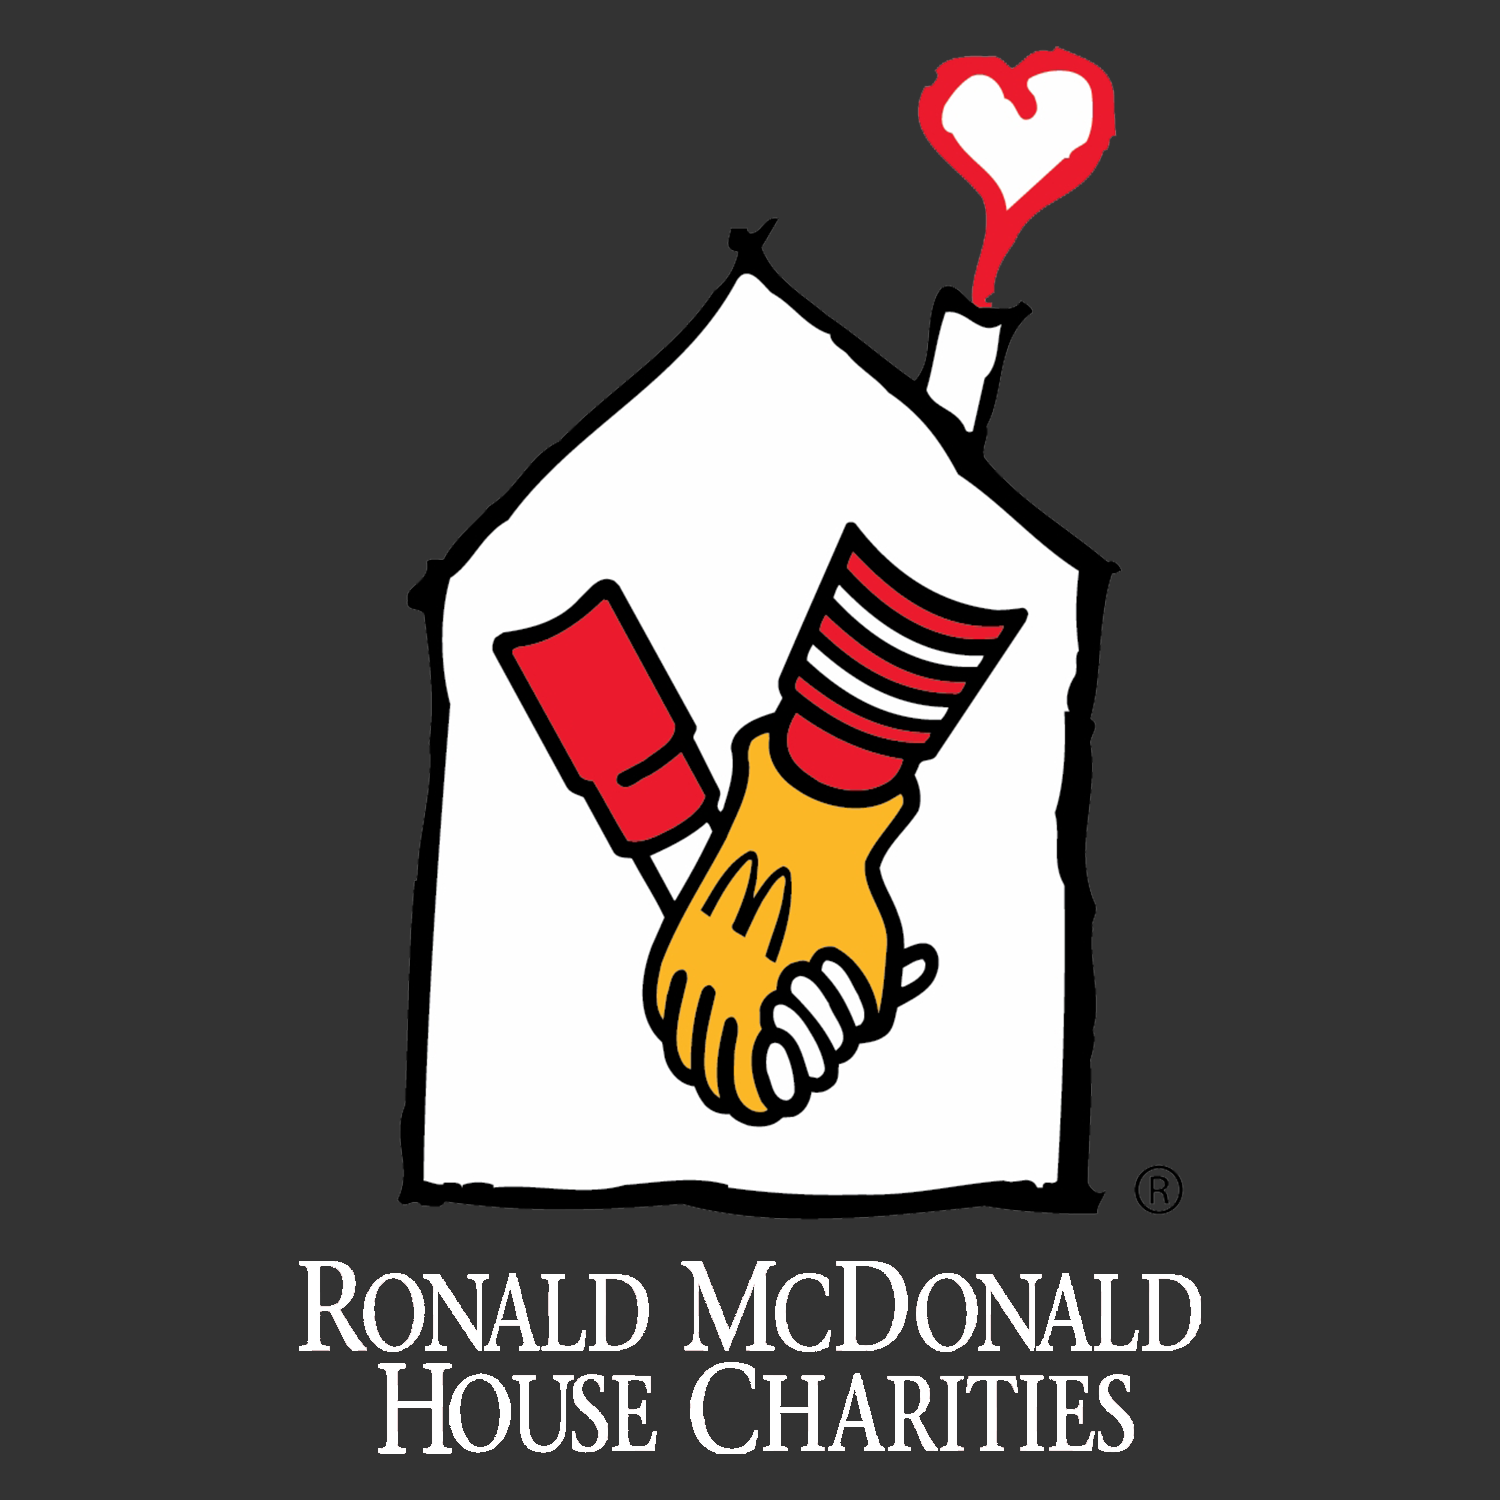 RONALD MCDONALD HOUSE CHARITIES